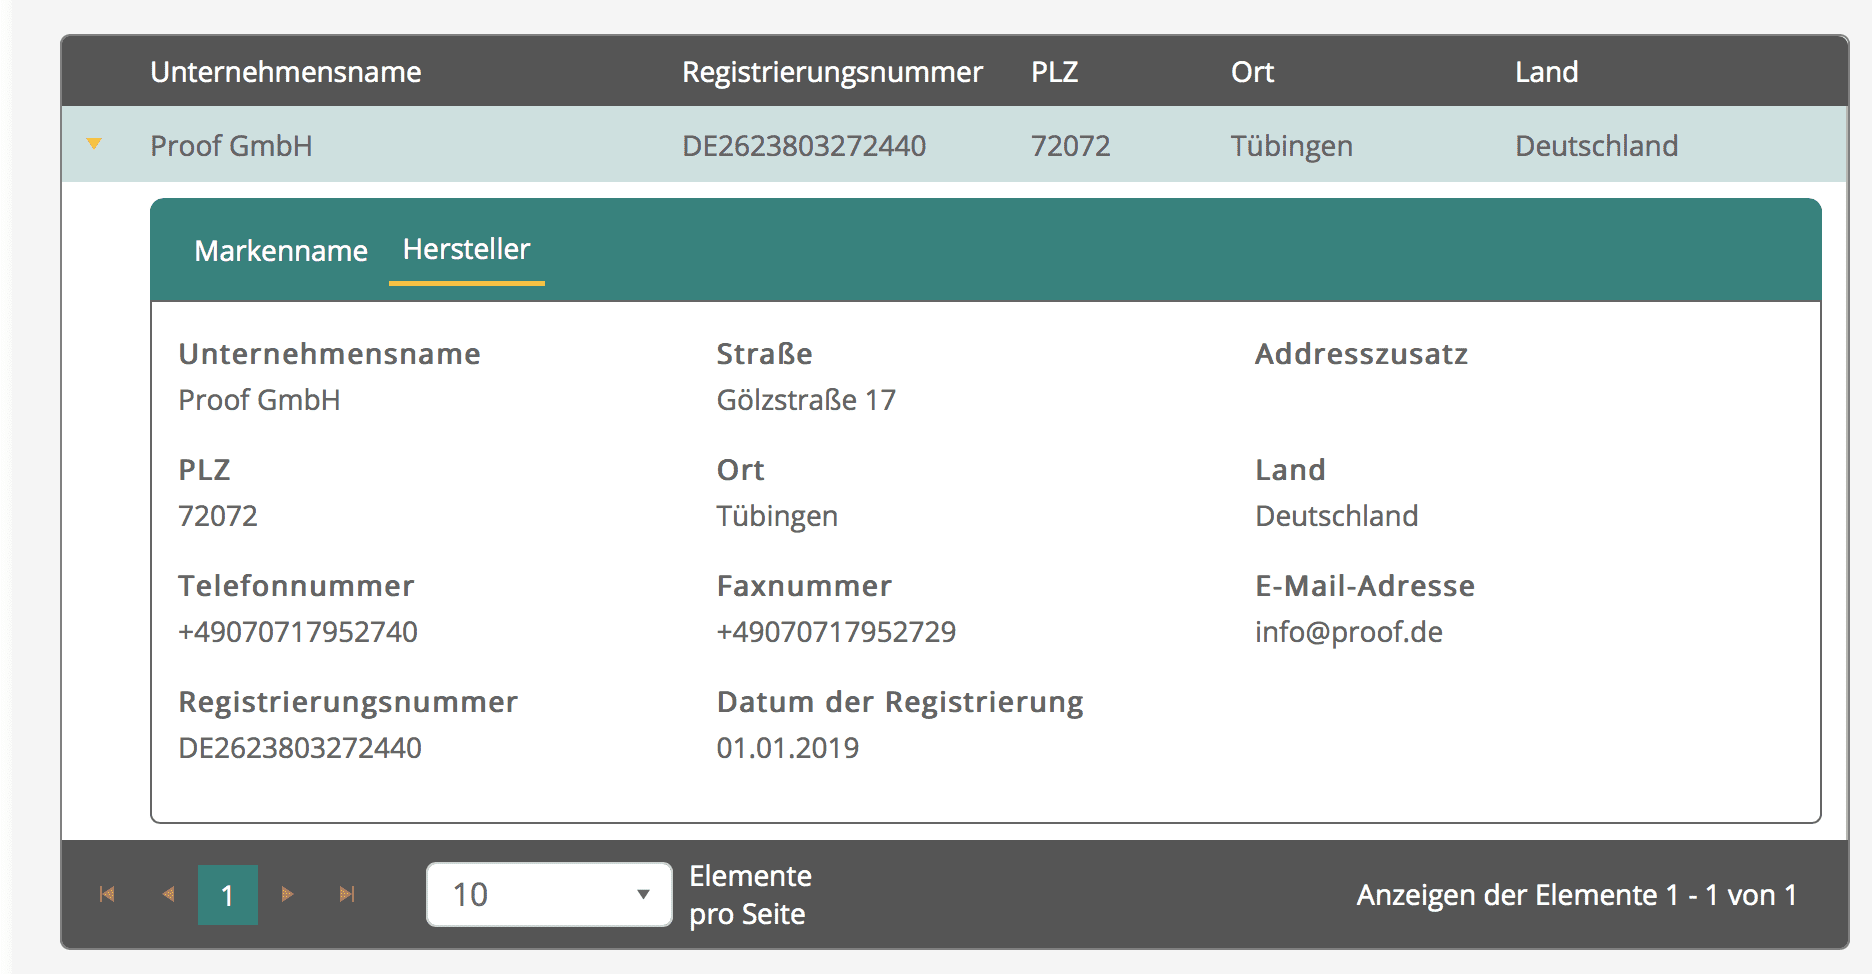 Proof GmbH Registro con VerpackG